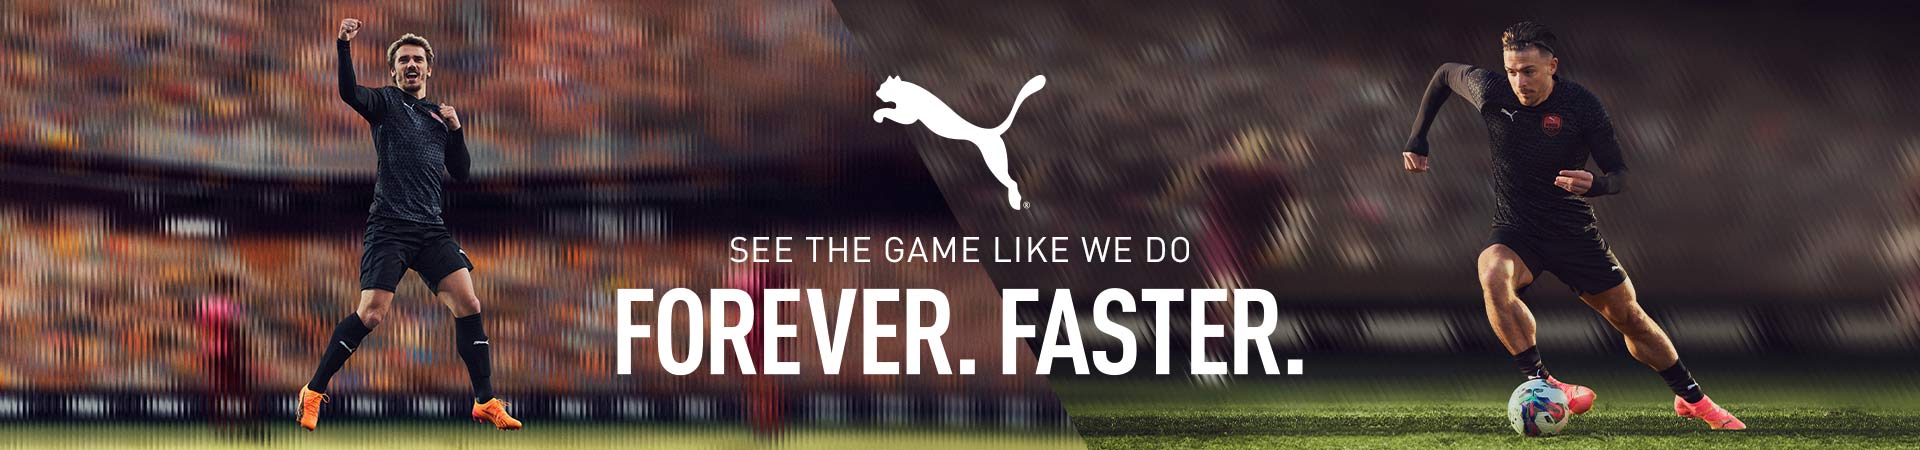 Puma Forever Faster